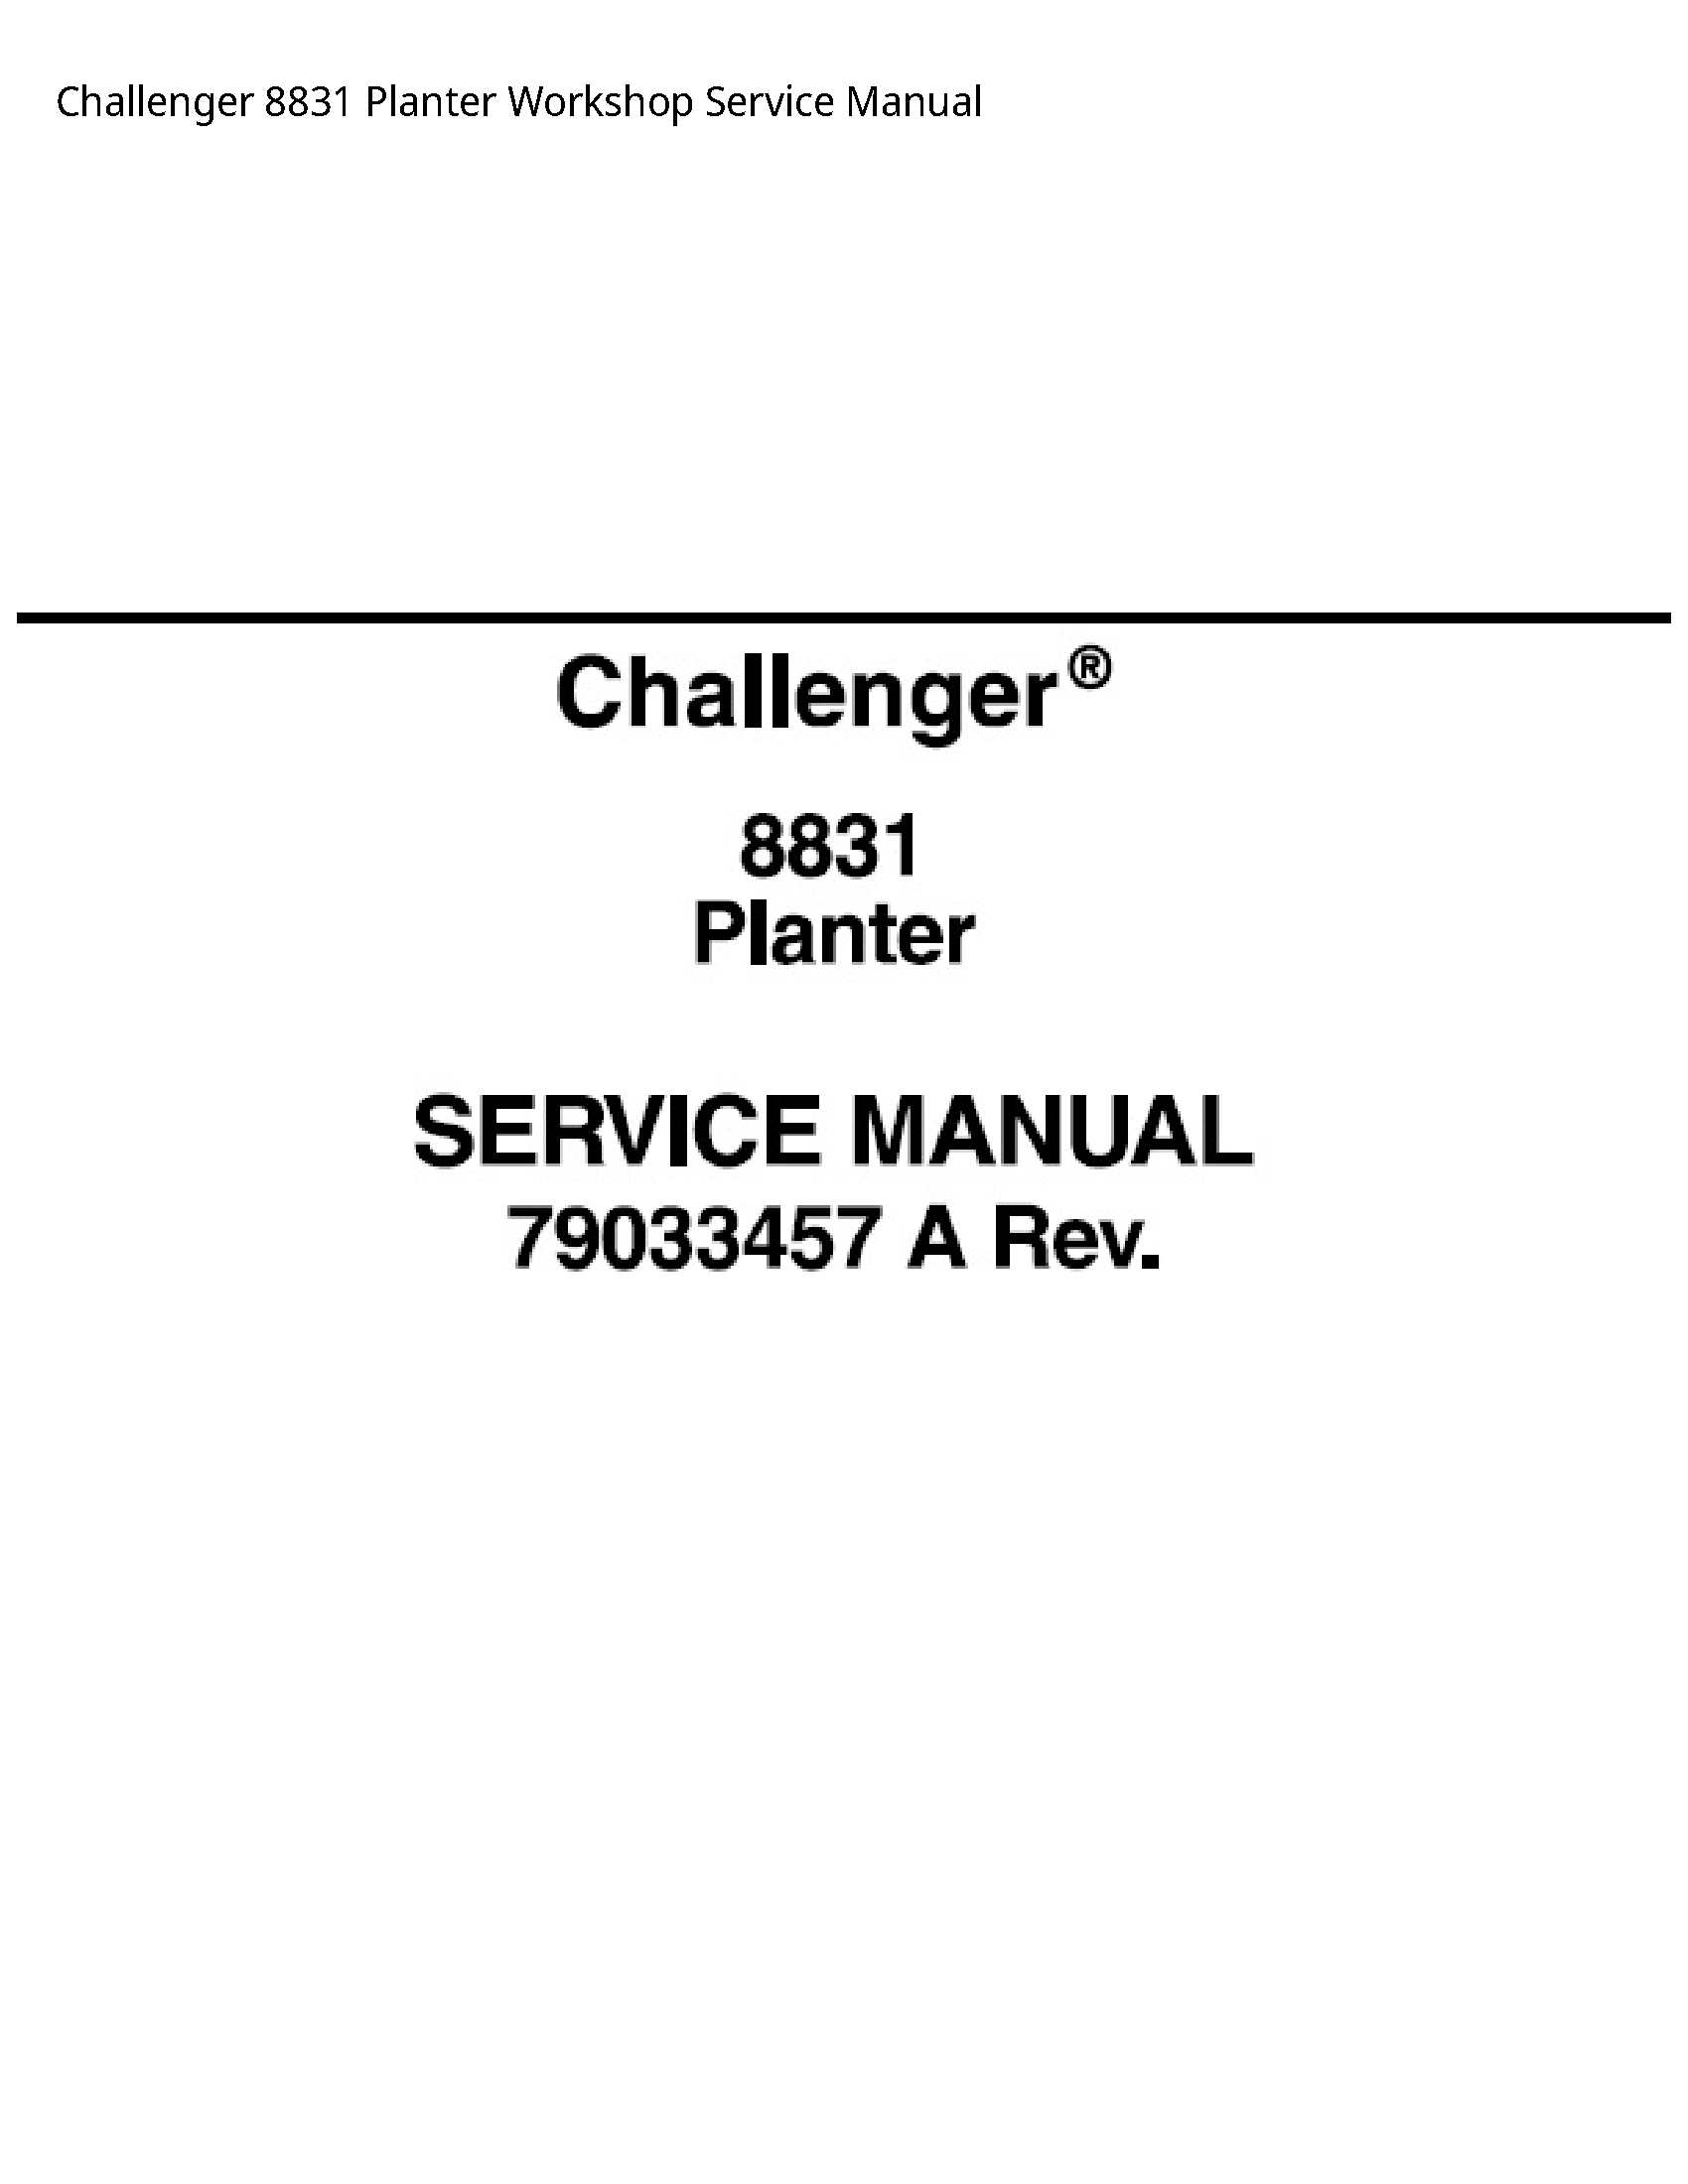 Challenger 8831 Planter Service manual